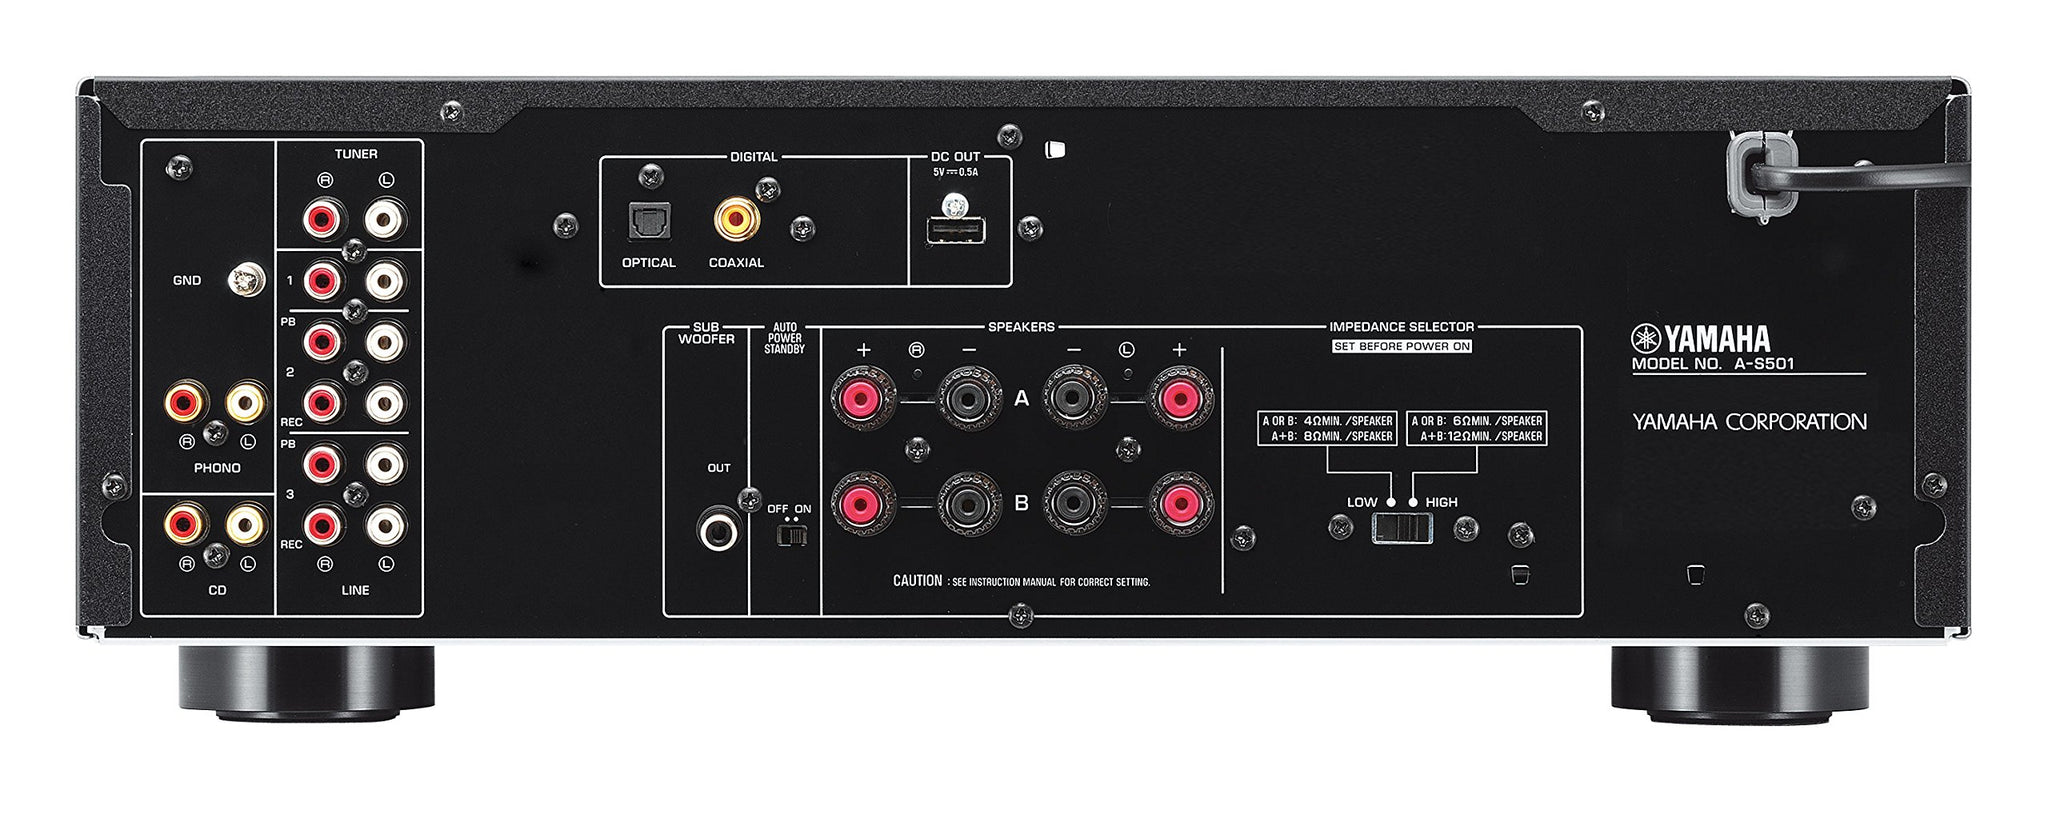 Yamaha AS-501 nero integrato 2 ch 85+85 watt rms